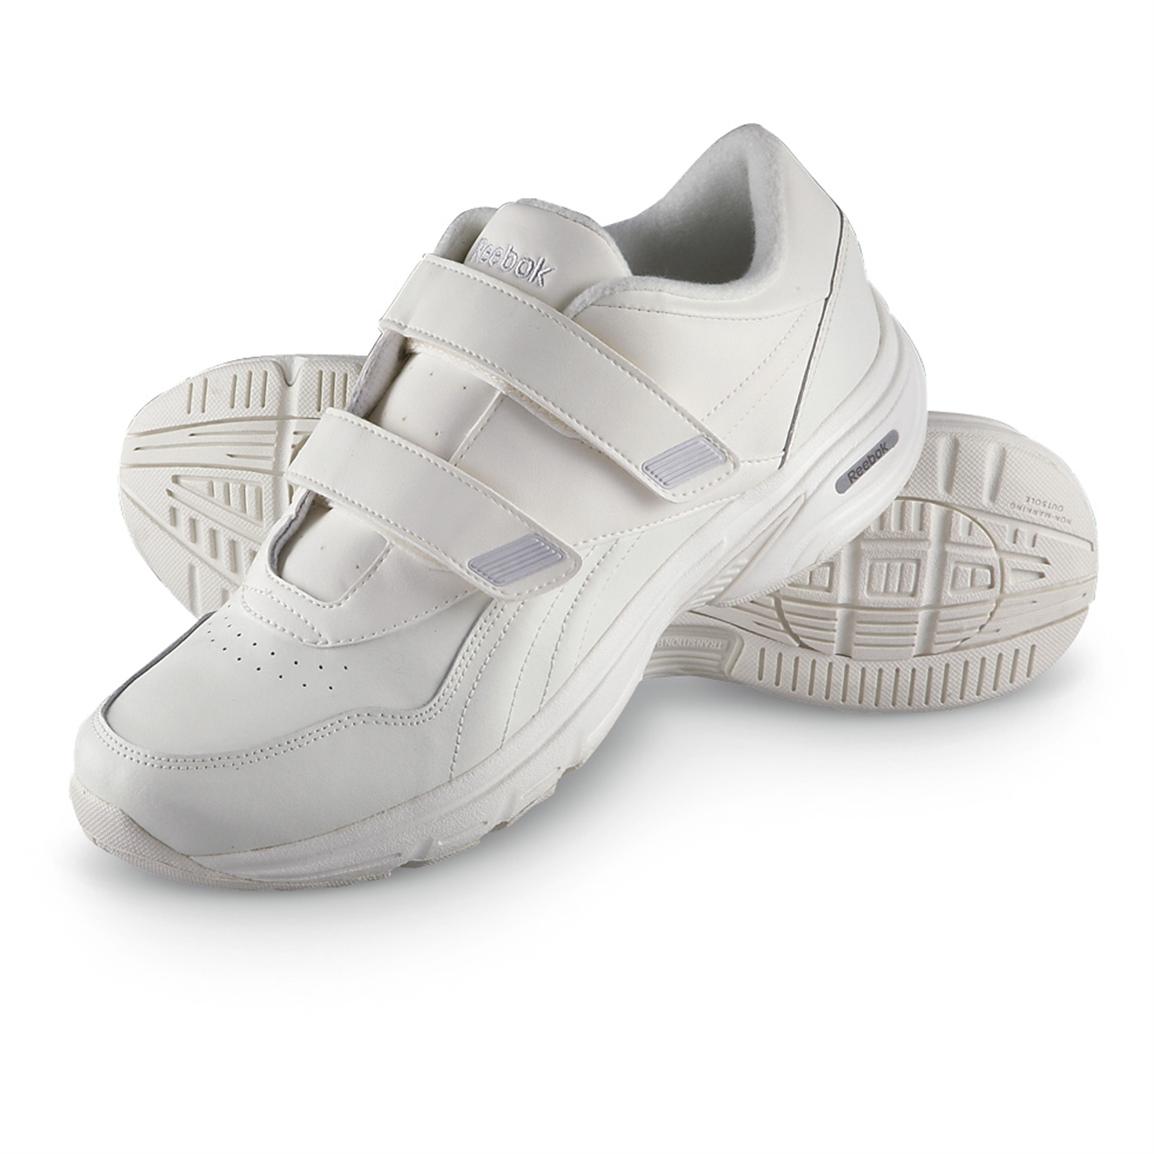 Men's Reebok® Walking Shoes, Cream 219006, Running Shoes & at Sportsman's